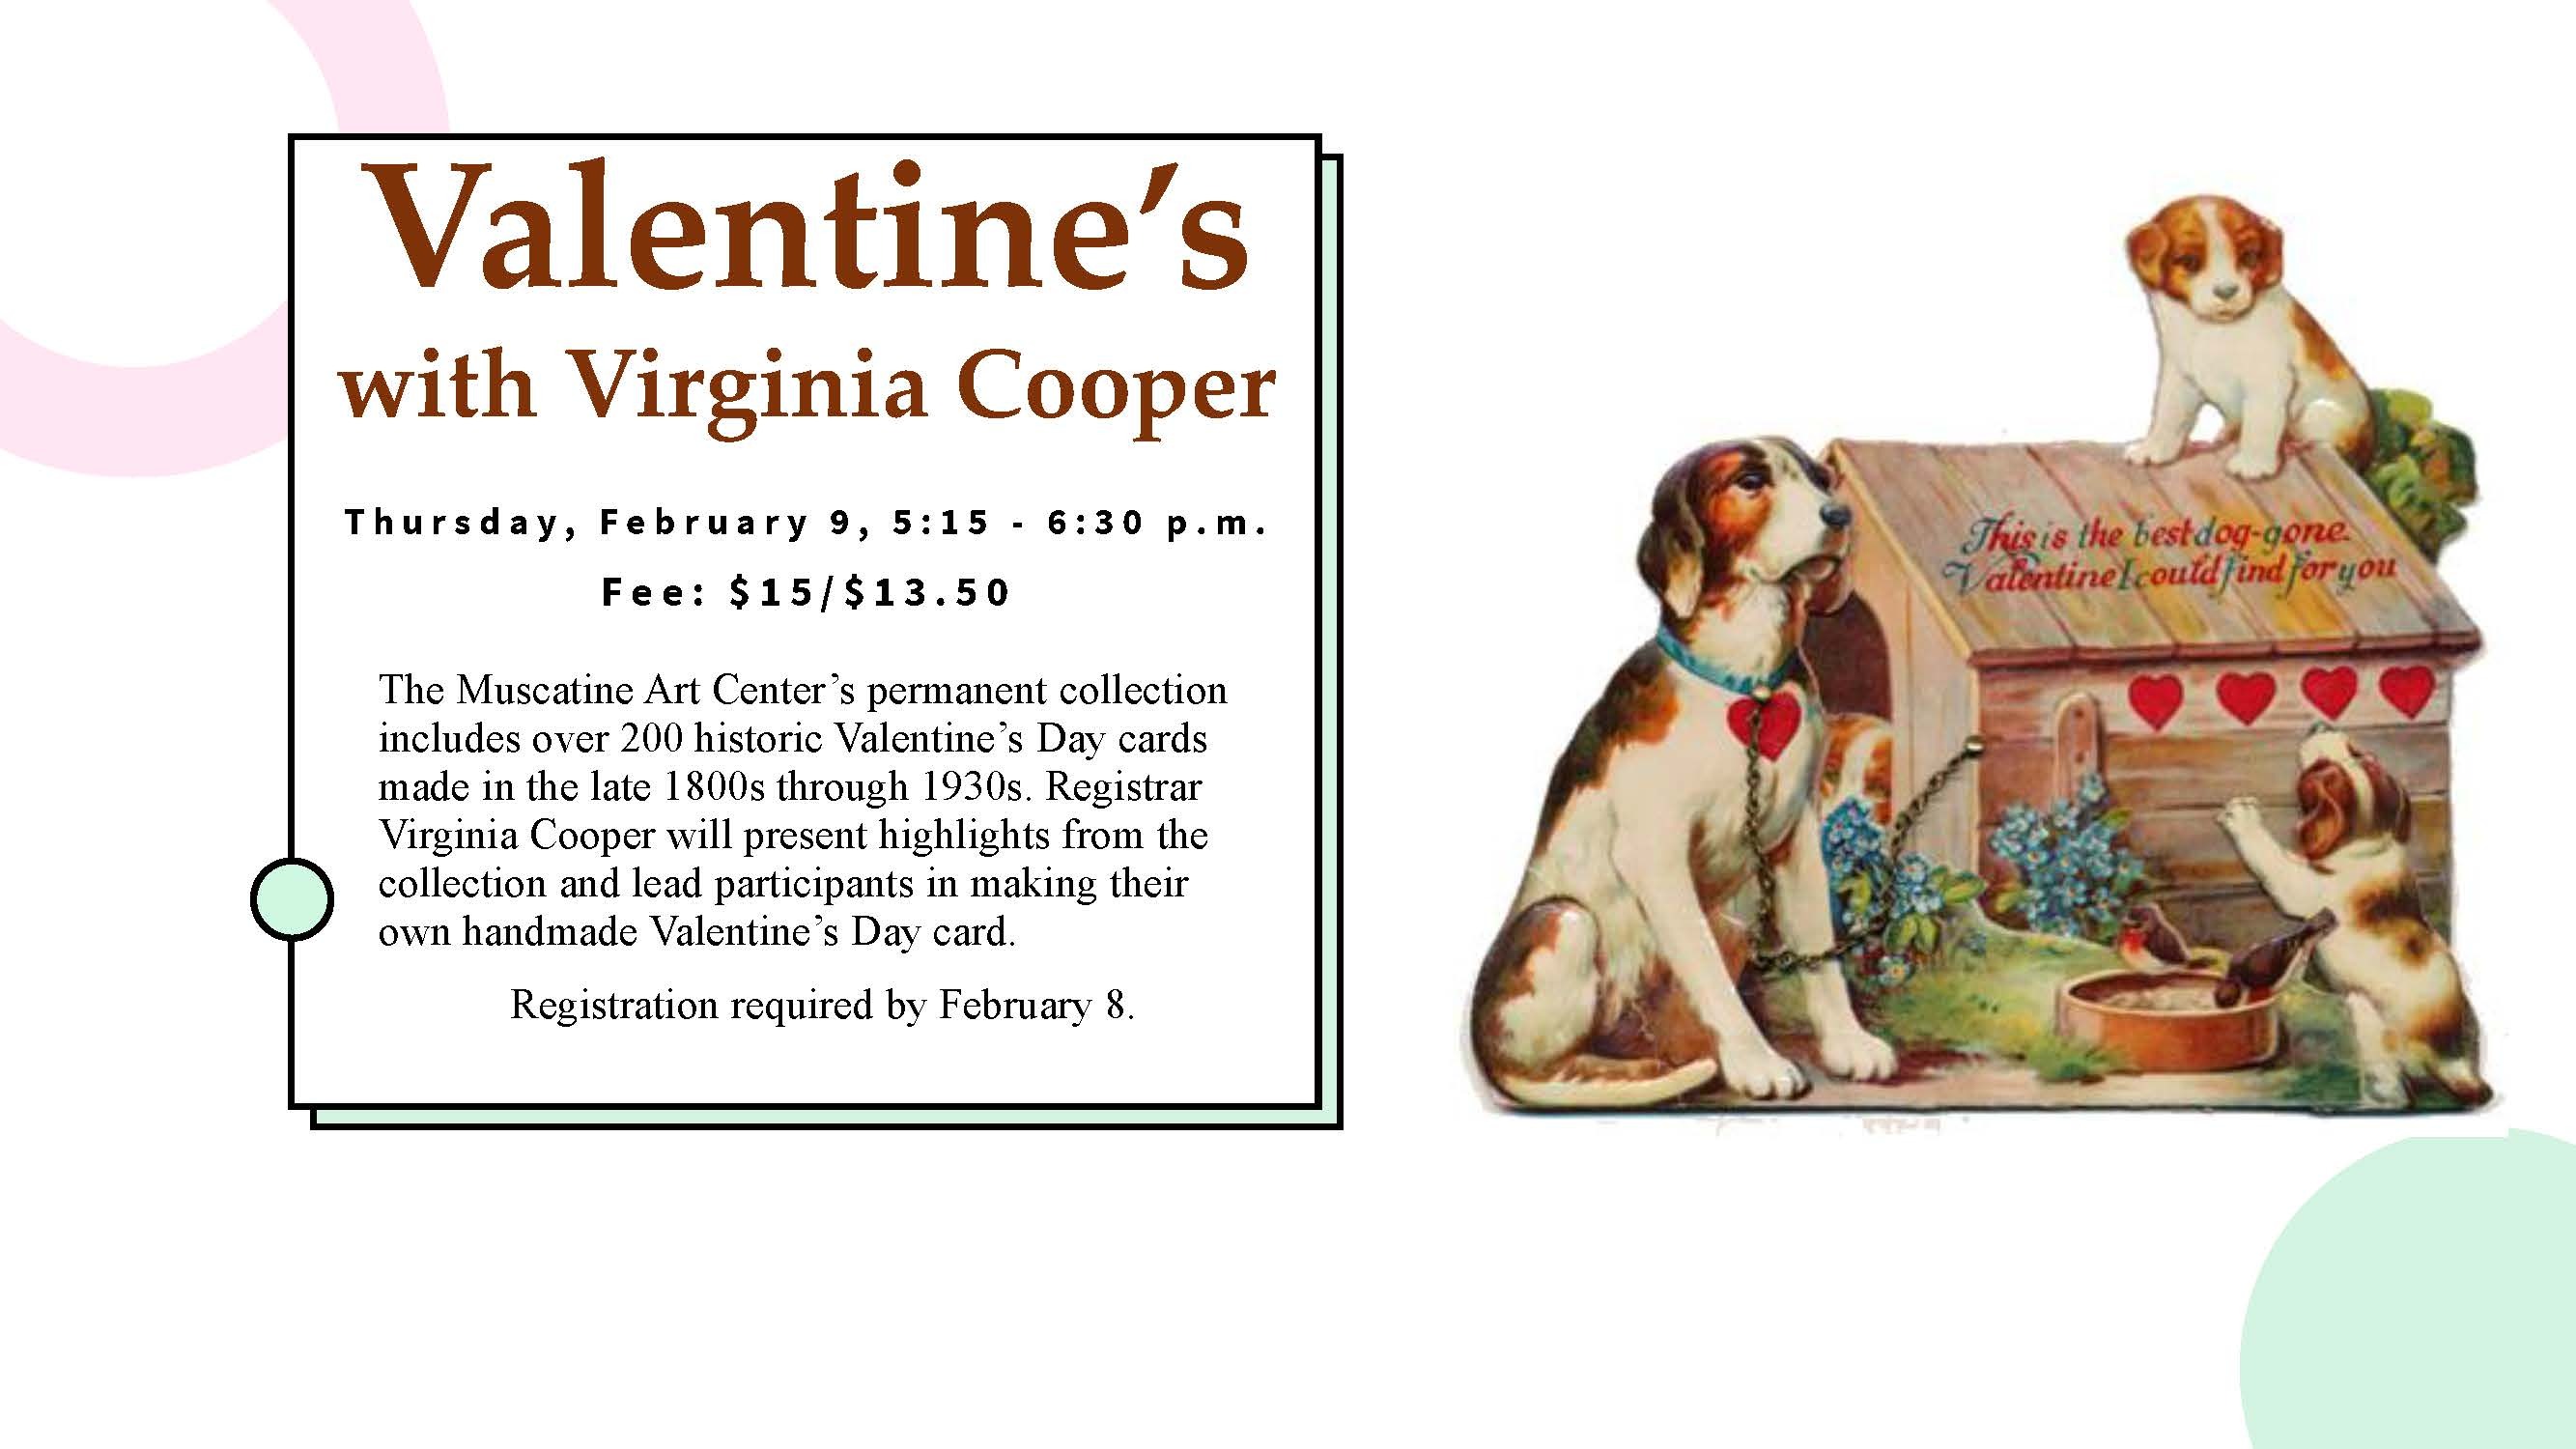 Valentine's with Virginia Cooper - February 9 Image